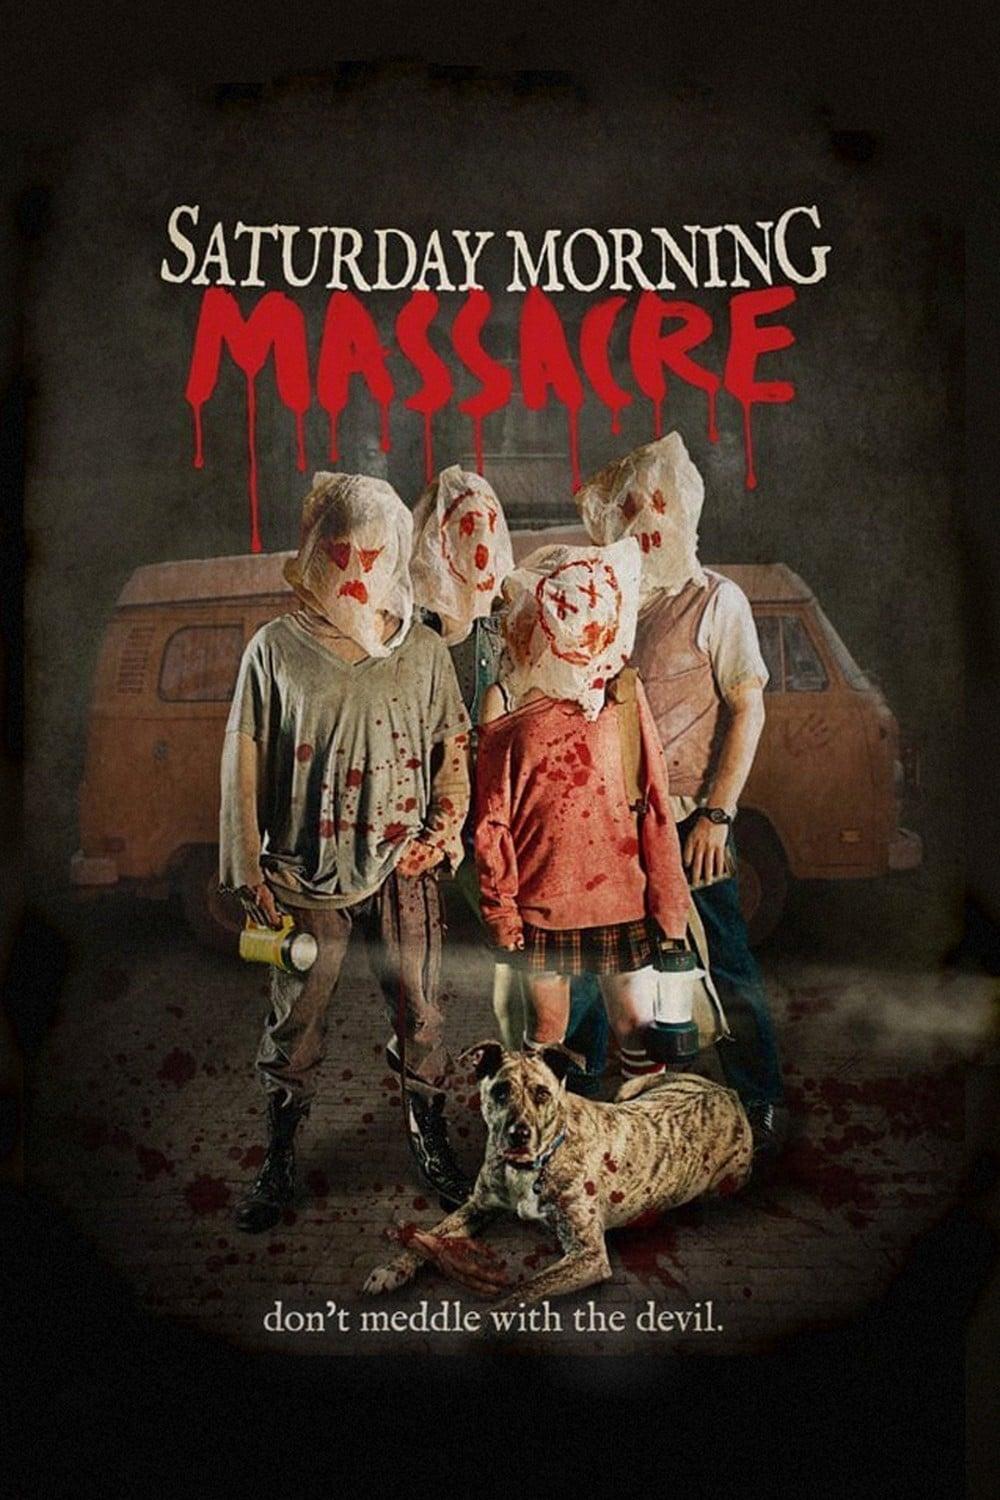 Saturday Morning Massacre poster